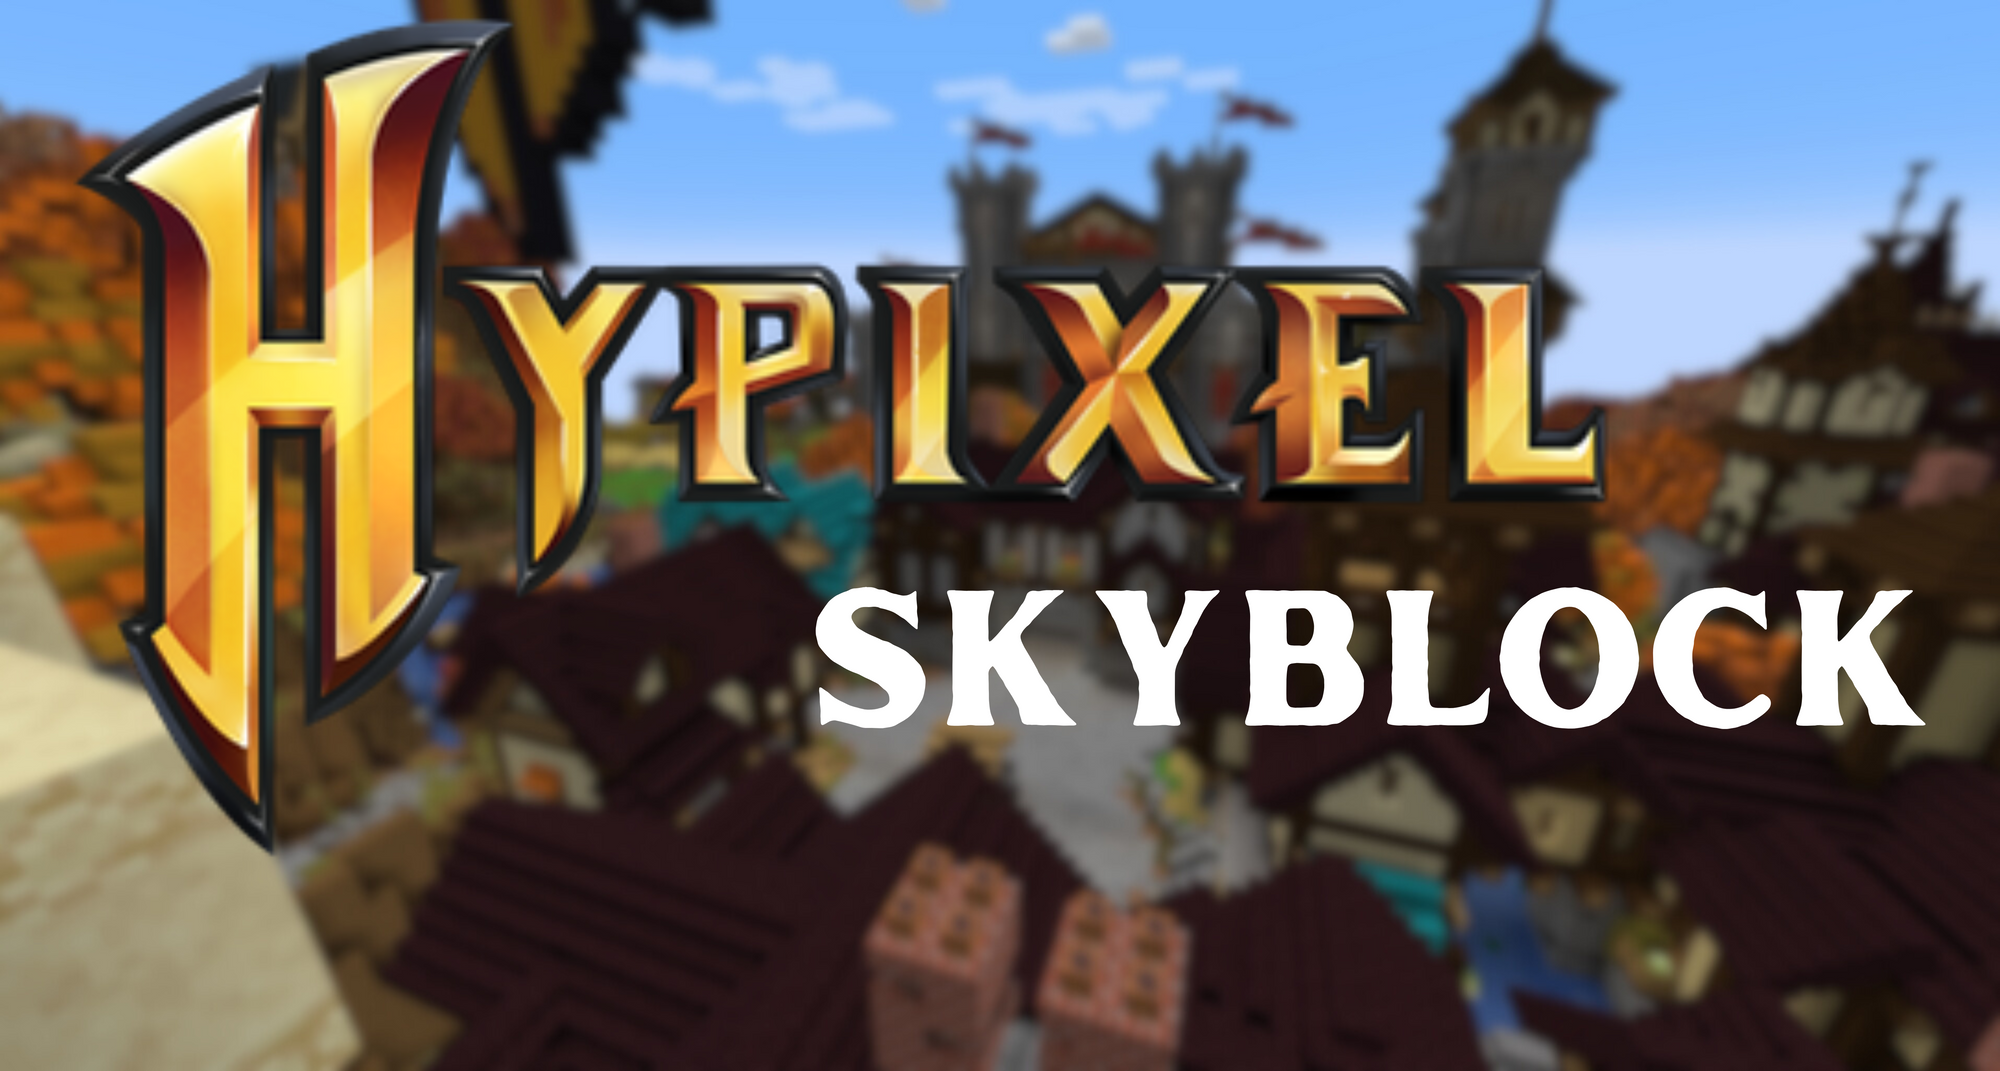 Palace Bridge - Hypixel SkyBlock Wiki